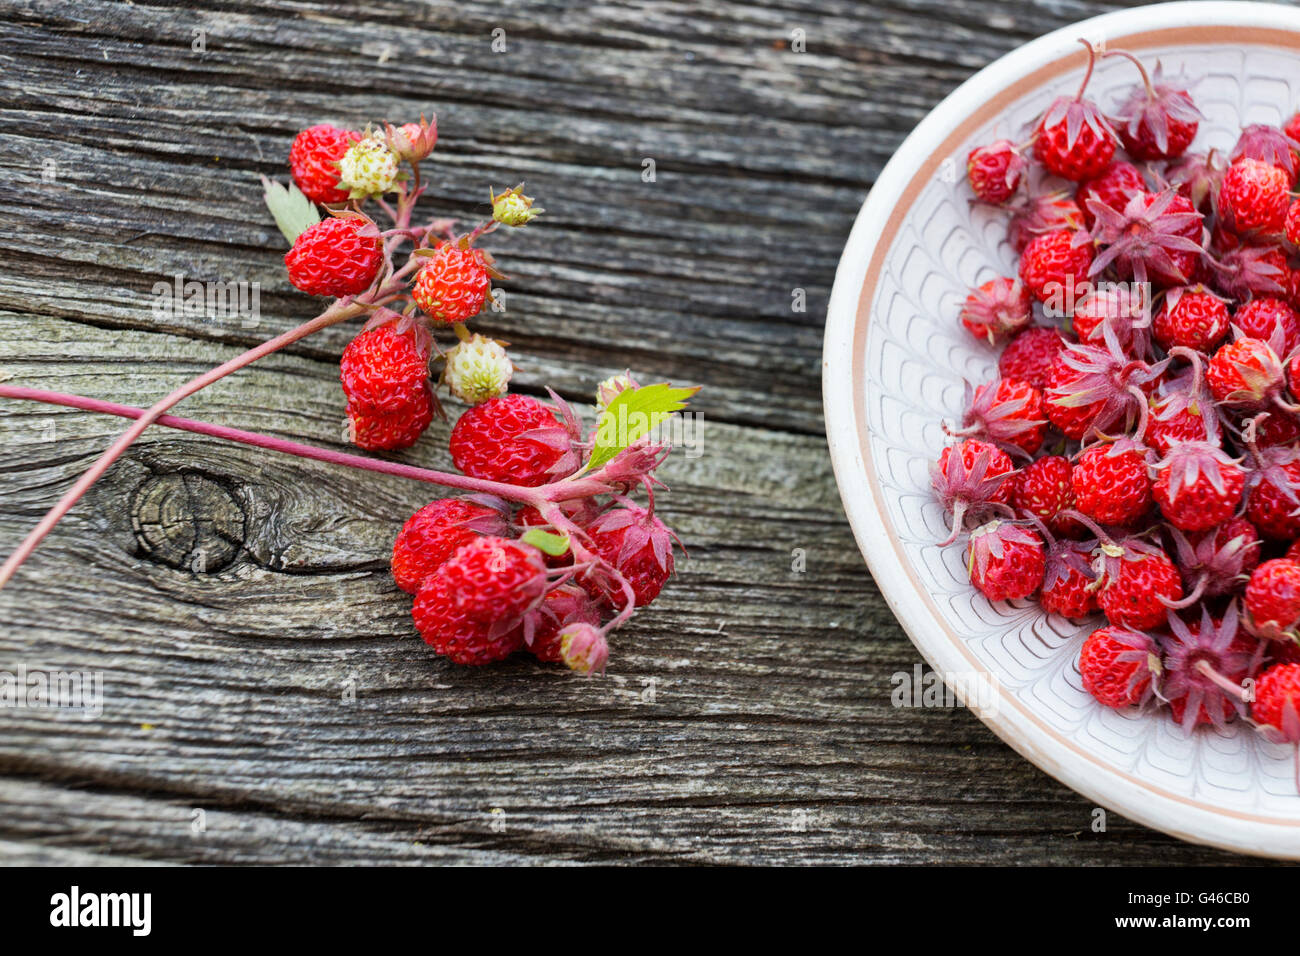 Virginia strawberry, wild strawberry, or common strawberry (Fragaria virginiana) on a plate Stock Photo